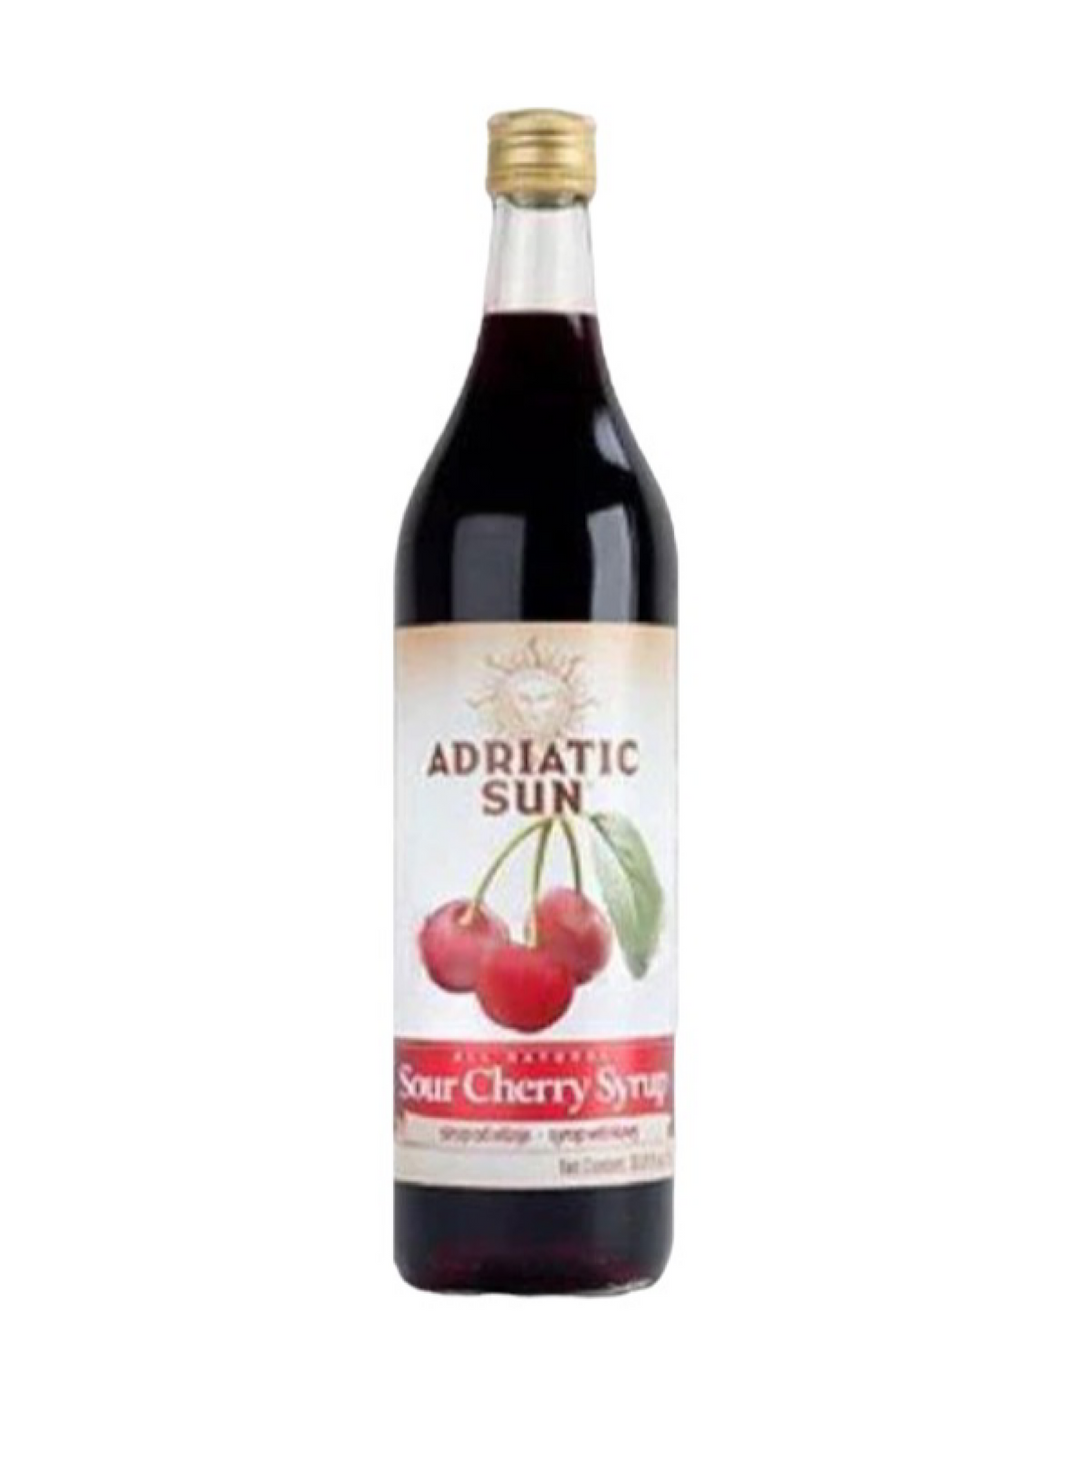 Sour Cherry Syrup - Adriatic Sun- 1 liter (31.3 fl oz)